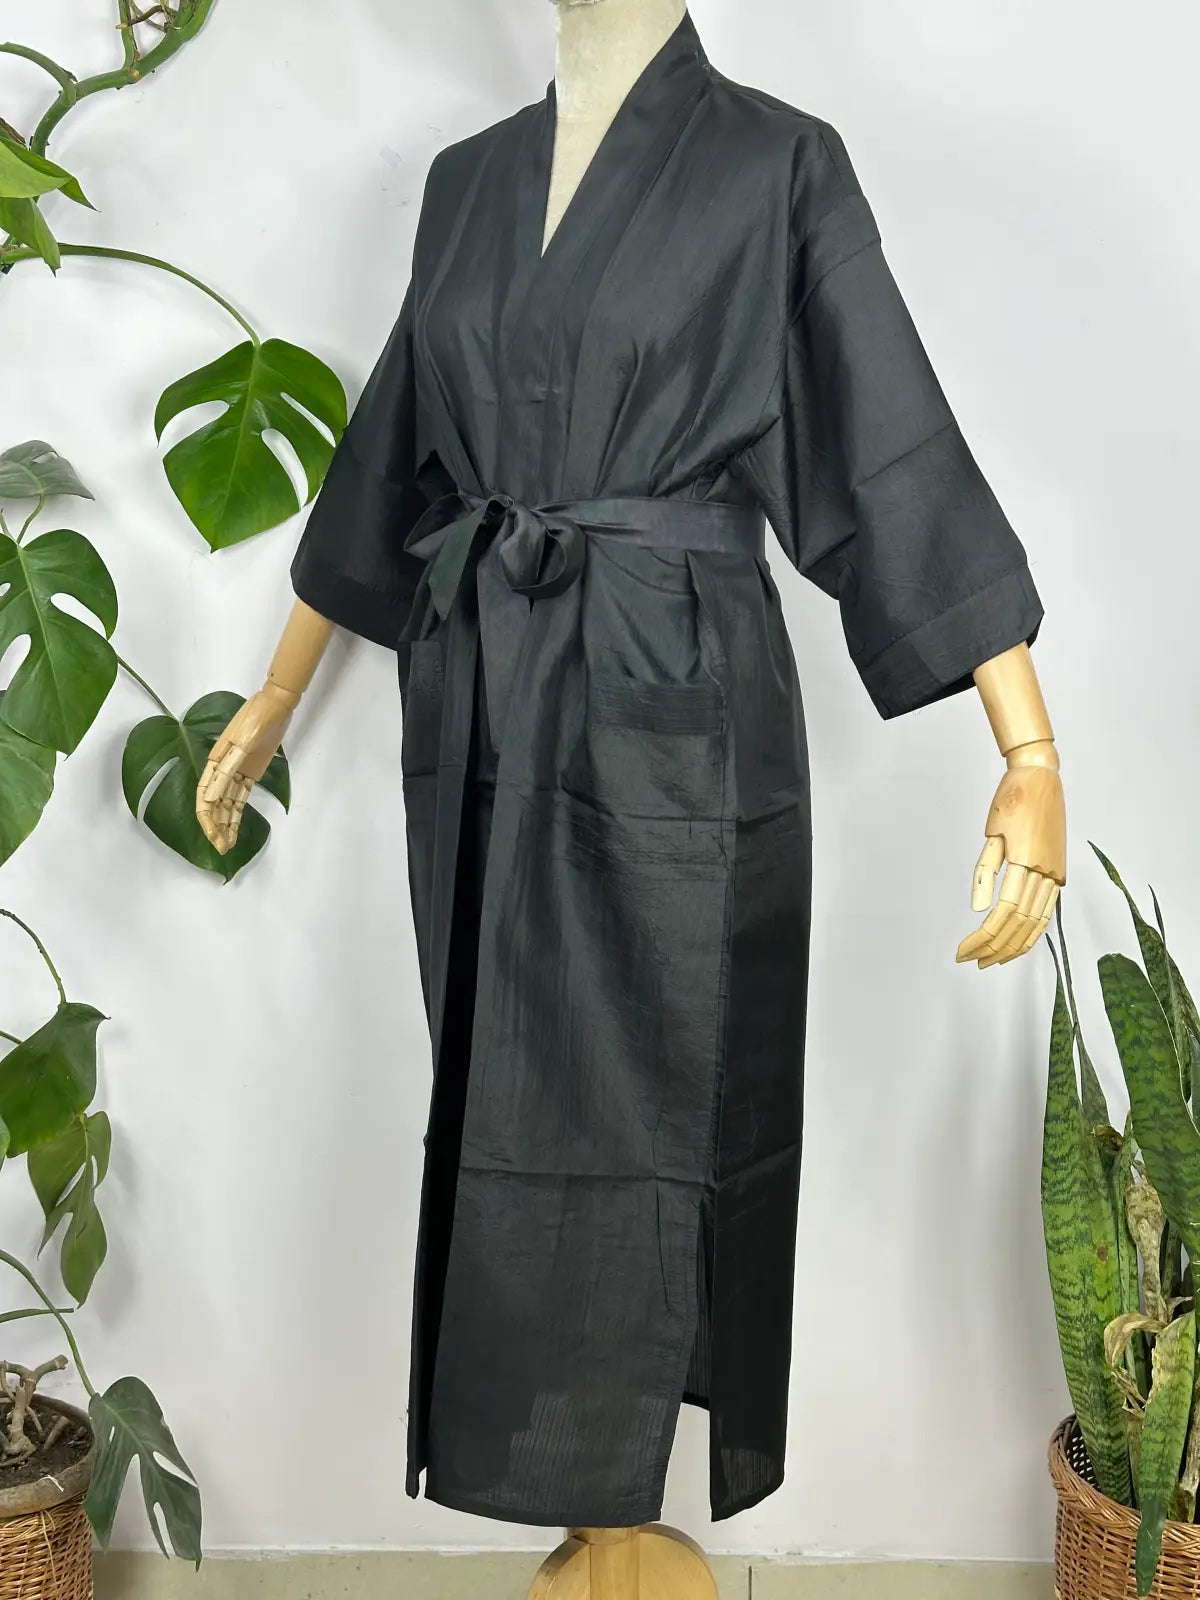 Upcycle Boho Chic Coverup Recycle Silk Sari Kimono | Vintage Elegance House Robe Duster Cardigan Beach Cover Up Sarong | Tropical Floral Summer Dress Kaftan